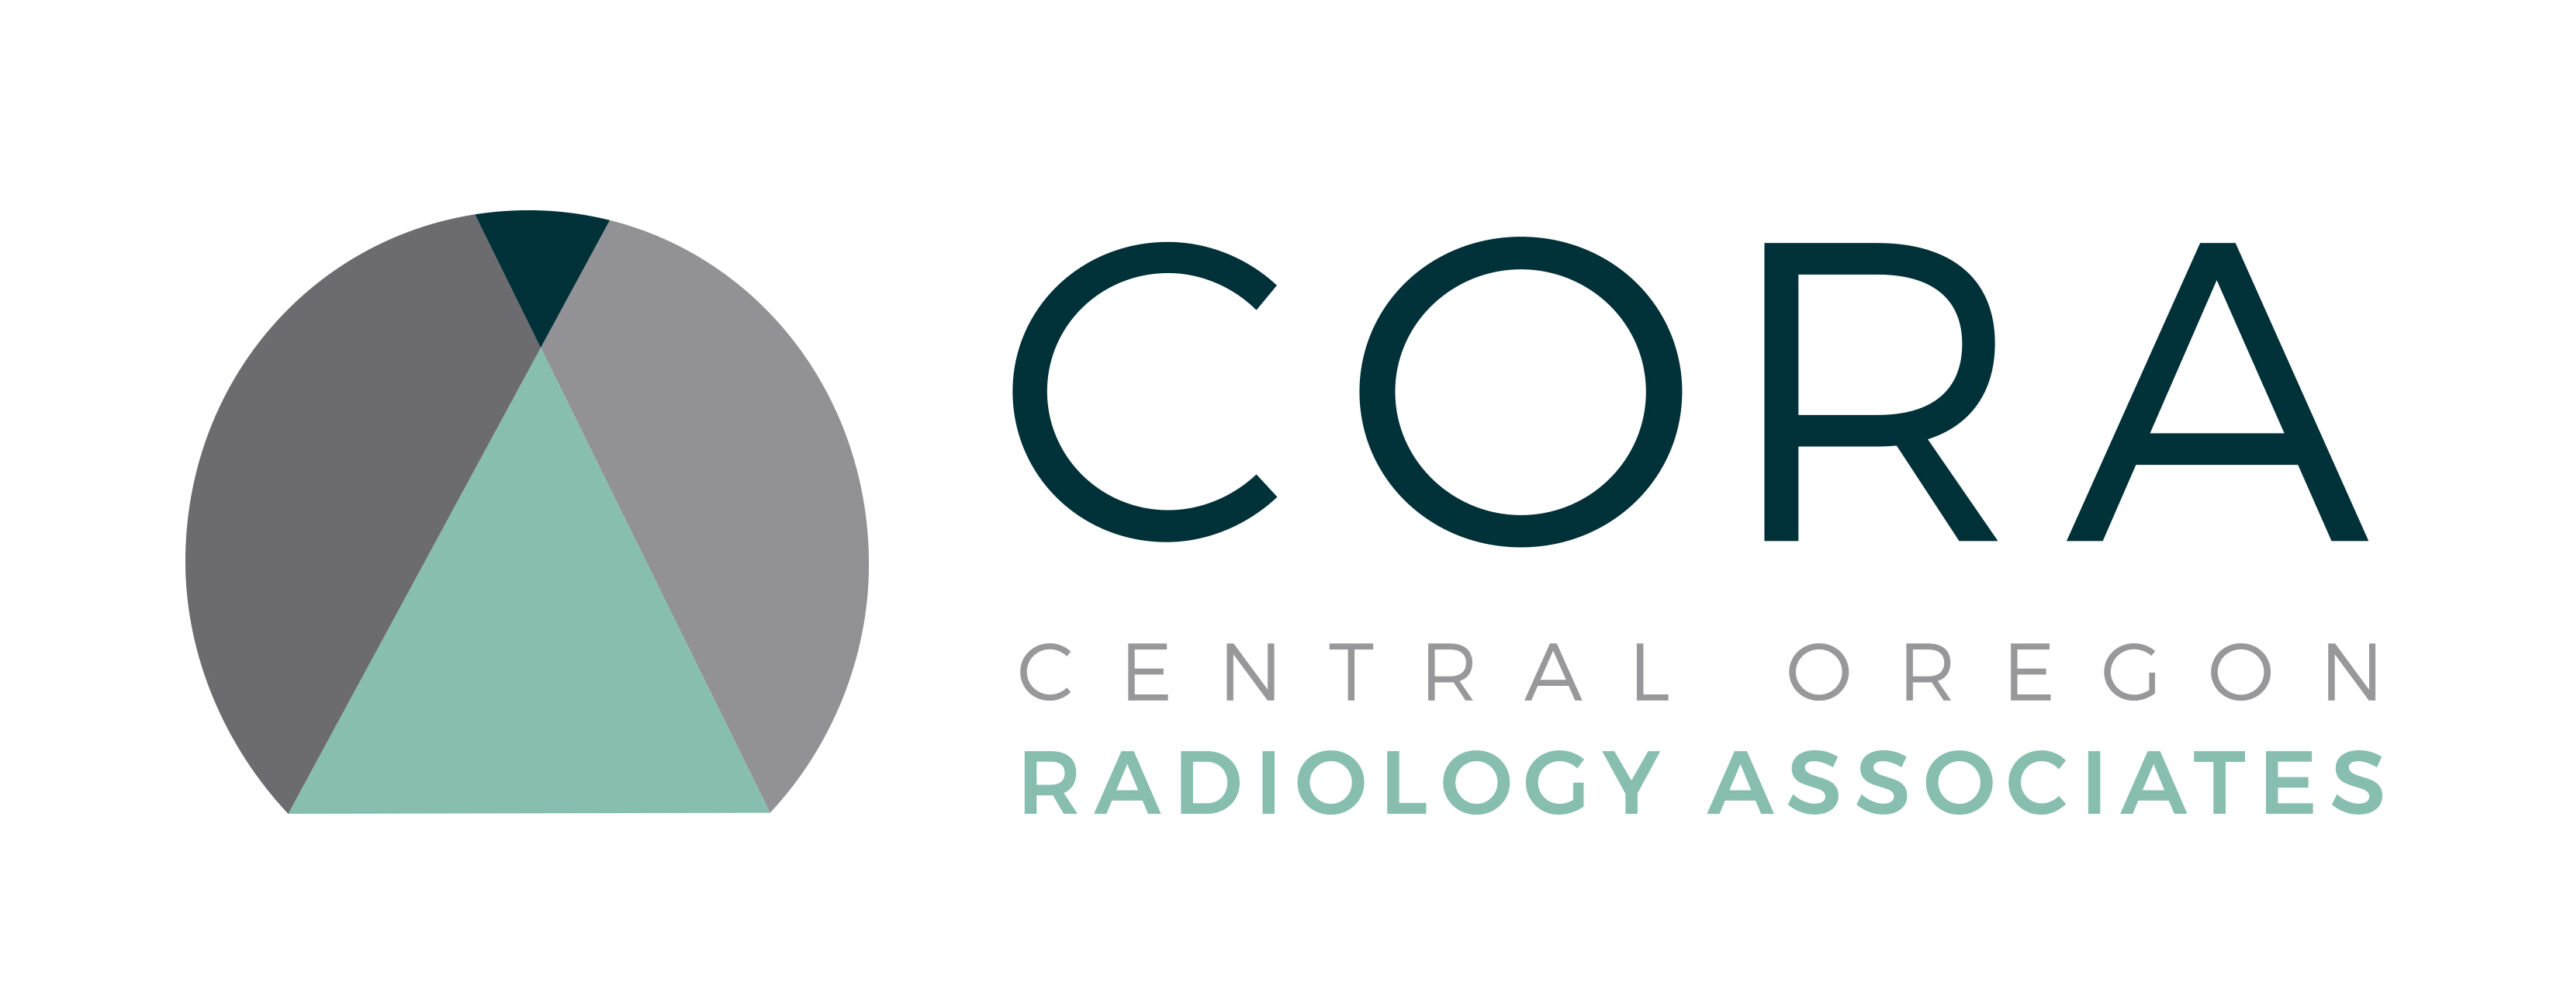 Central Oregon Radiology Associates